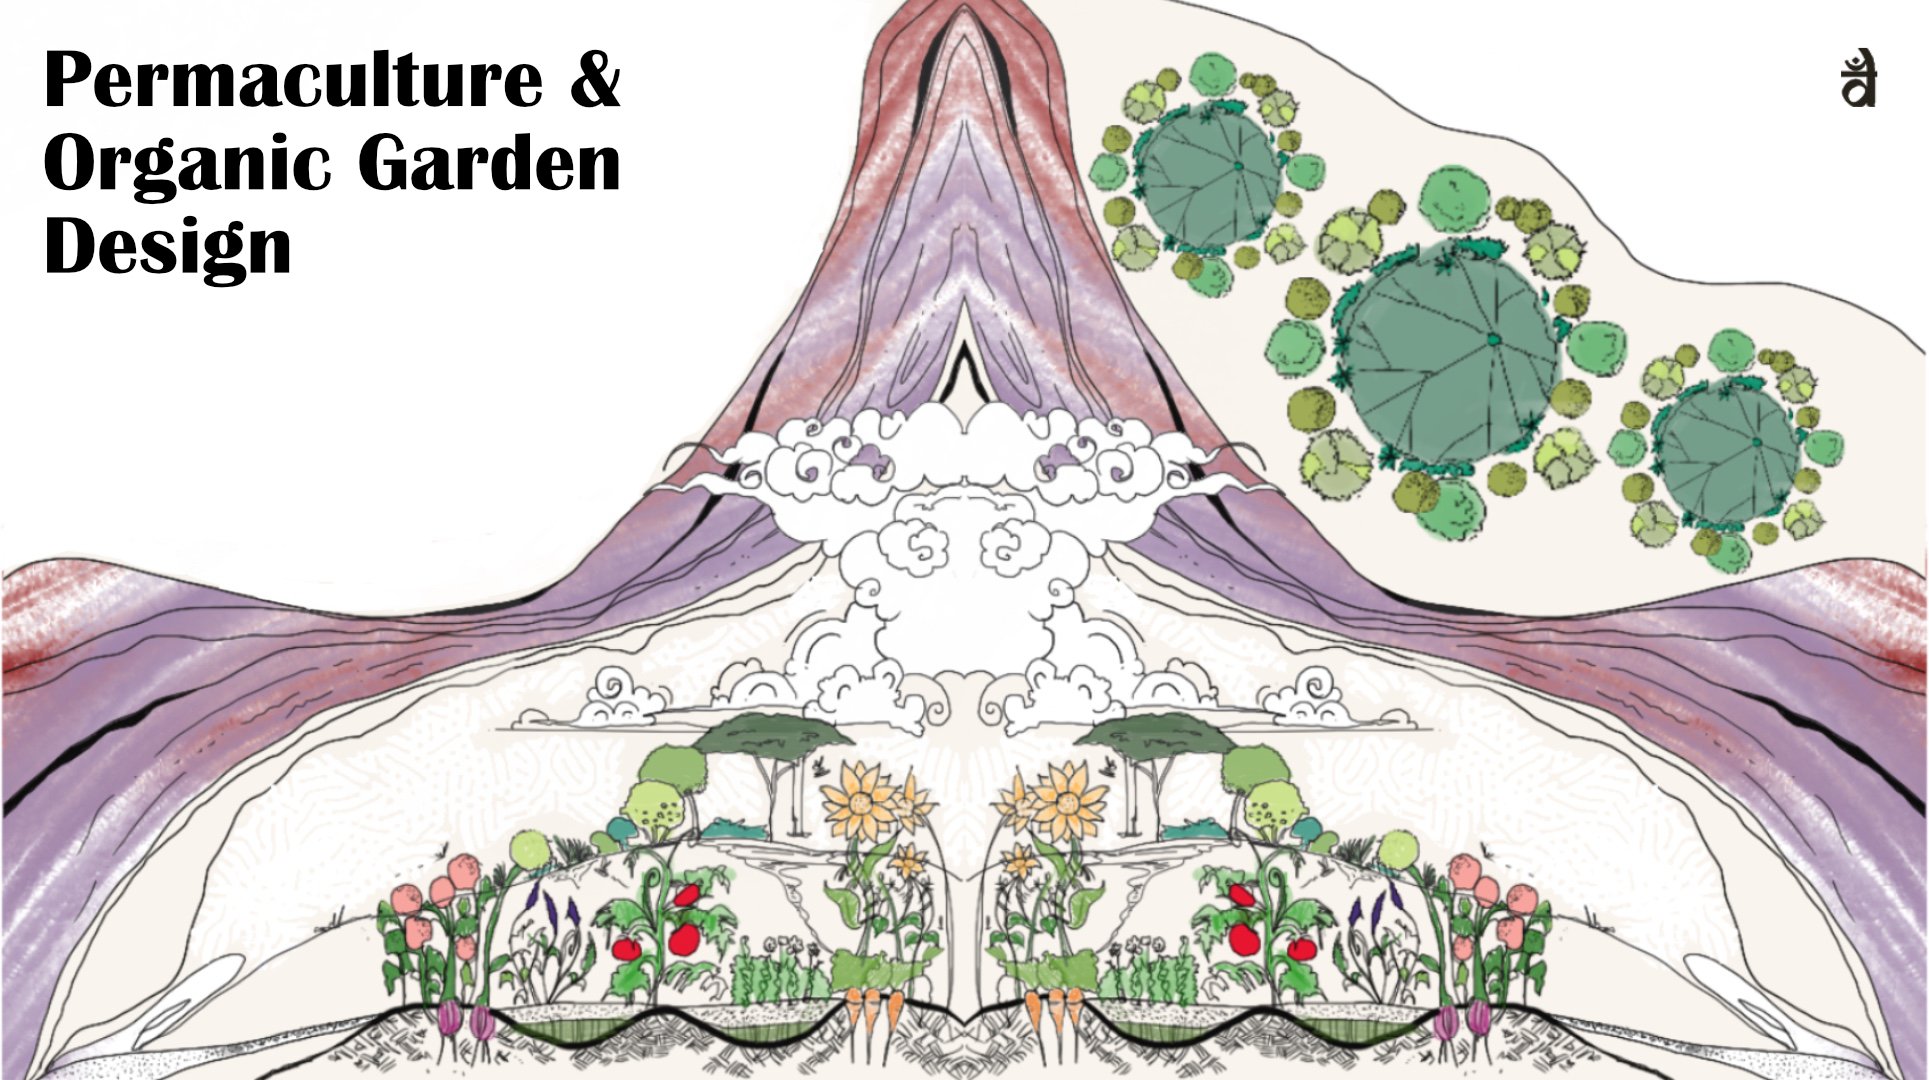 Permaculture & Organic Garden Design